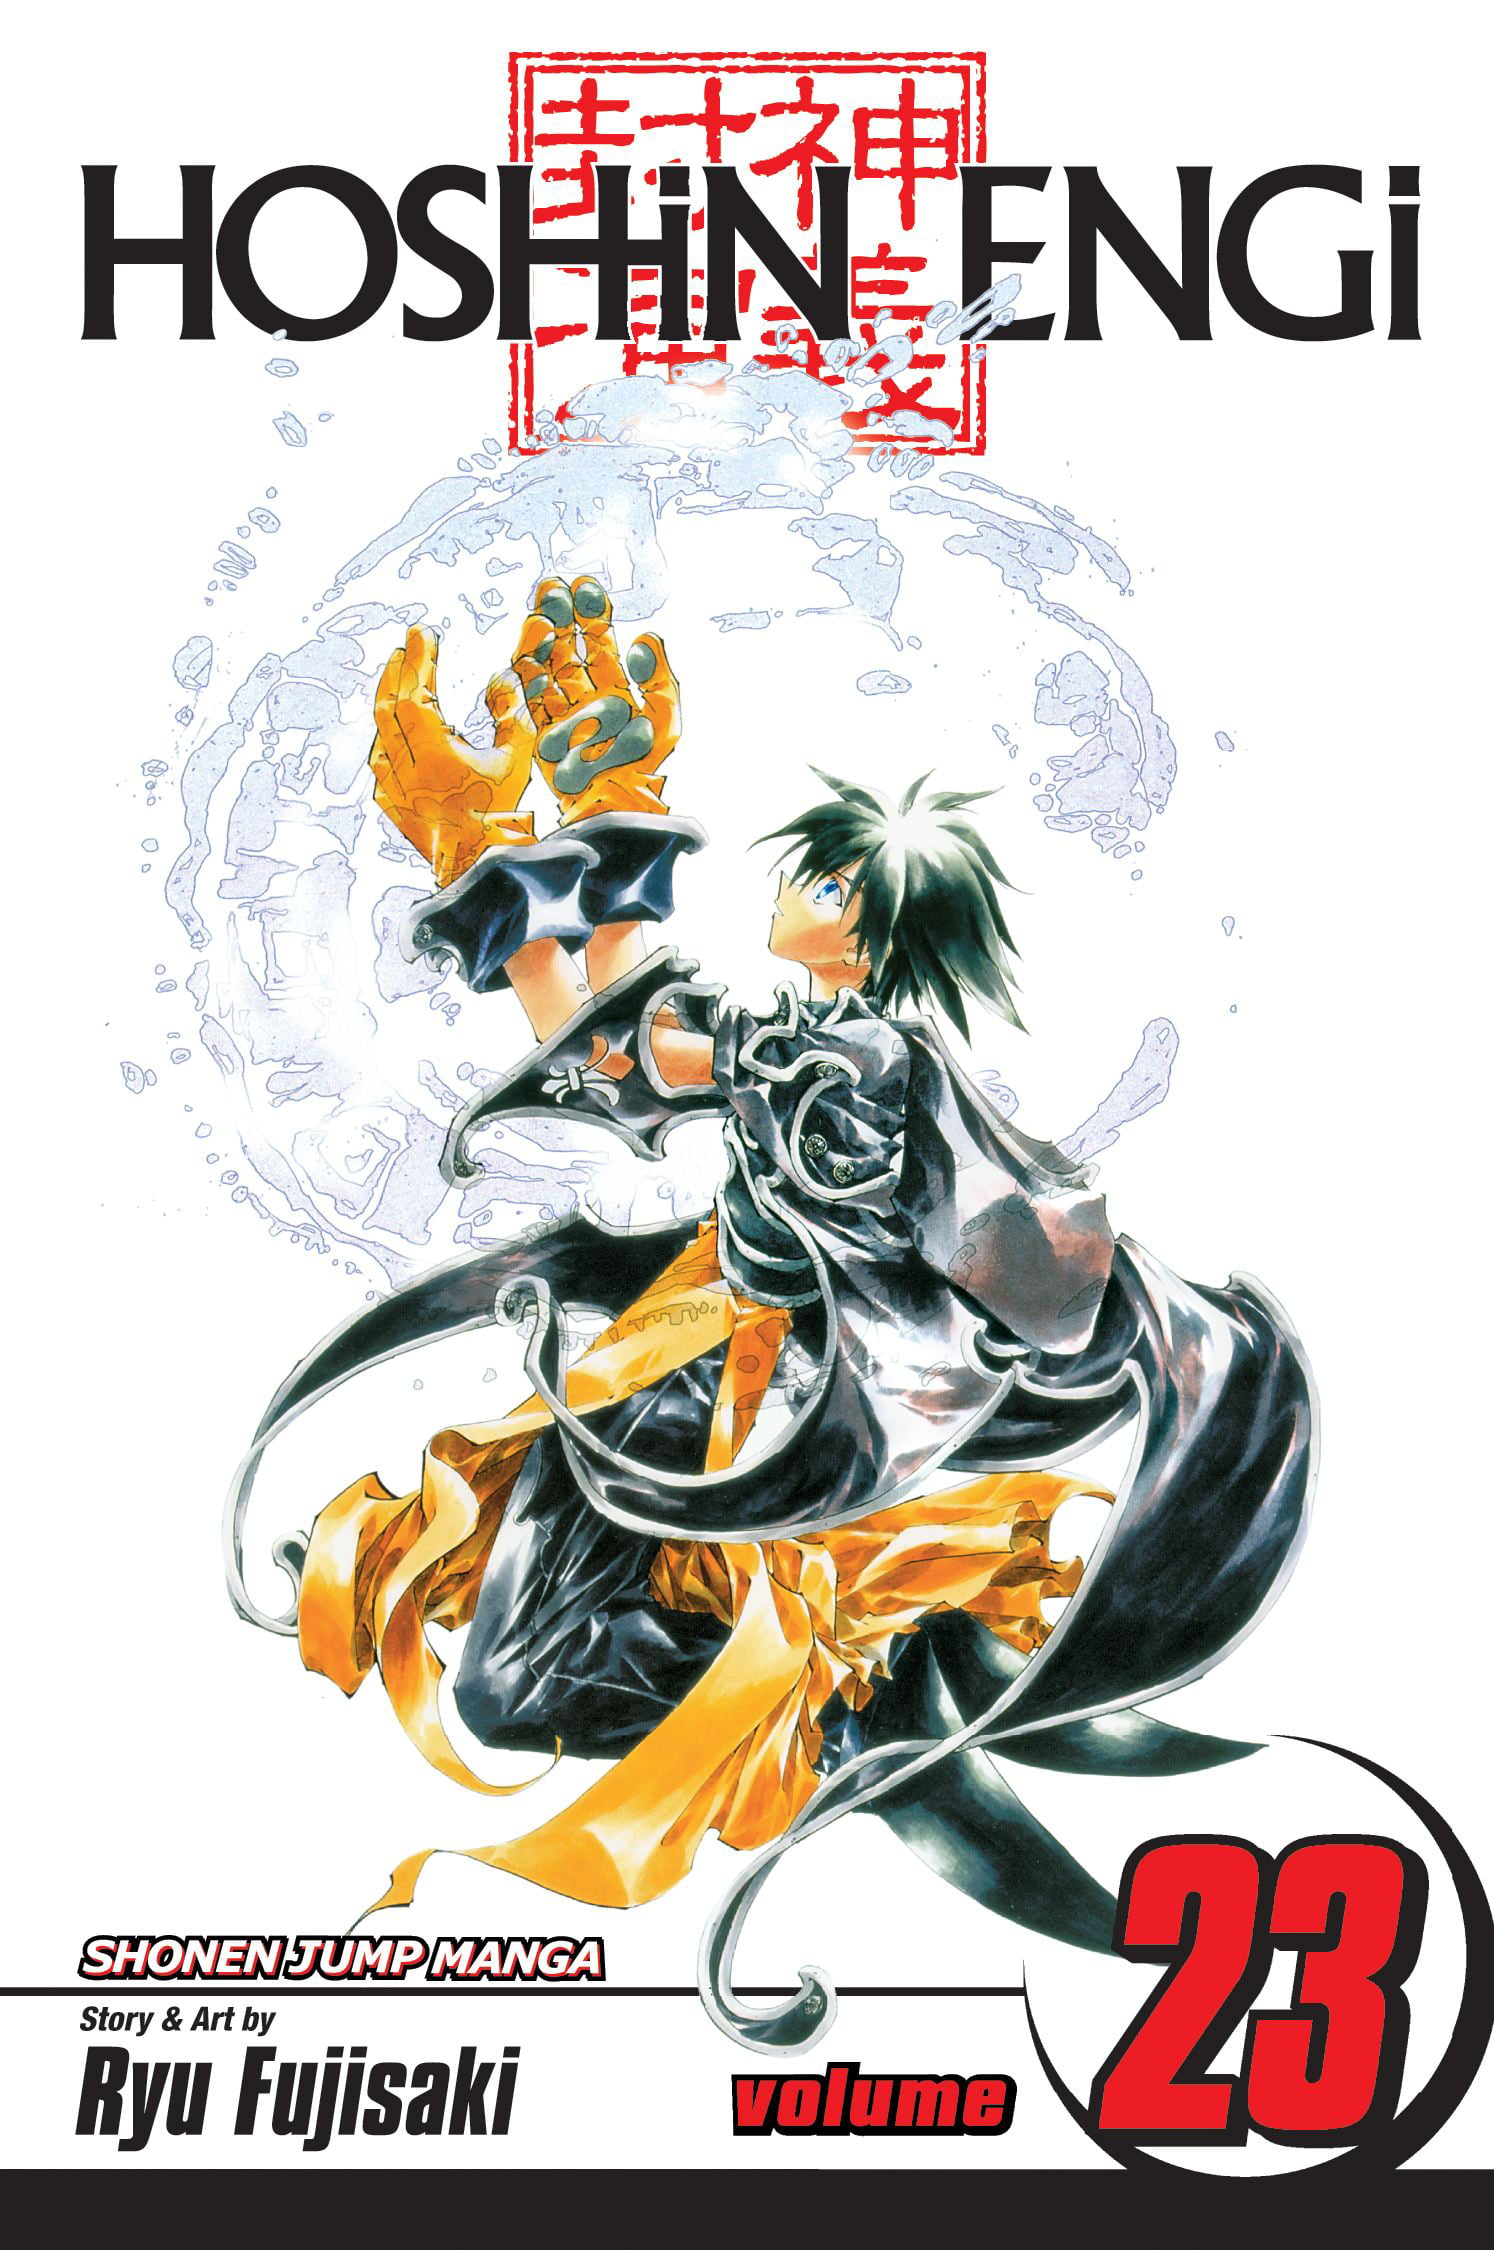 HOSHIN ENGI VOL 1-23 VIZ MEDIA English Manga Brand New Complete set Viz Media 